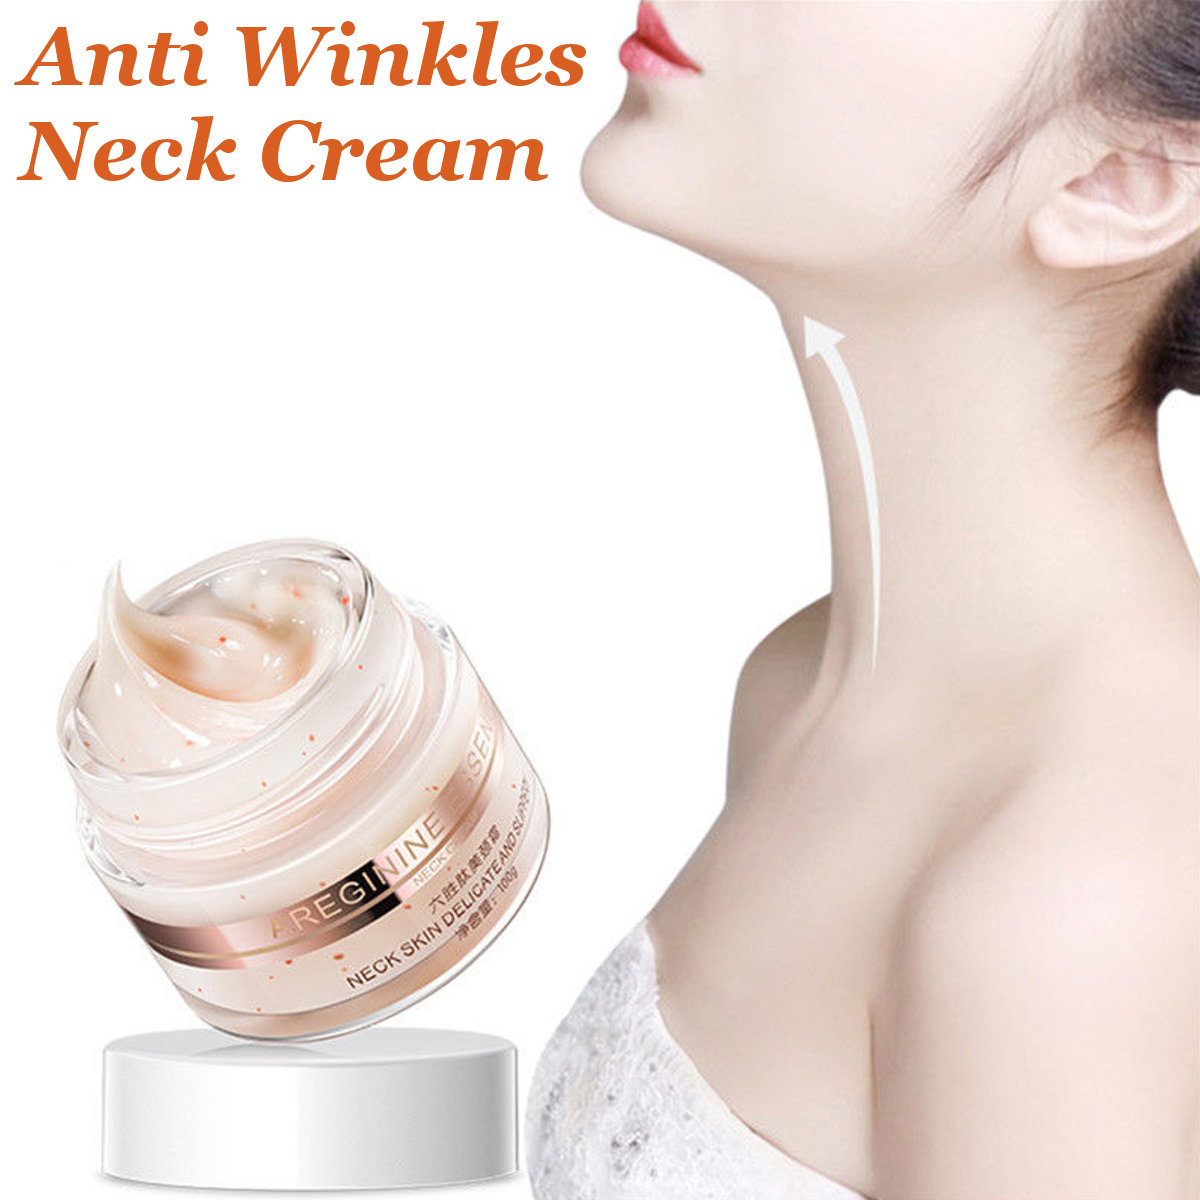 

100g Anti Wrinkle Neck Cream